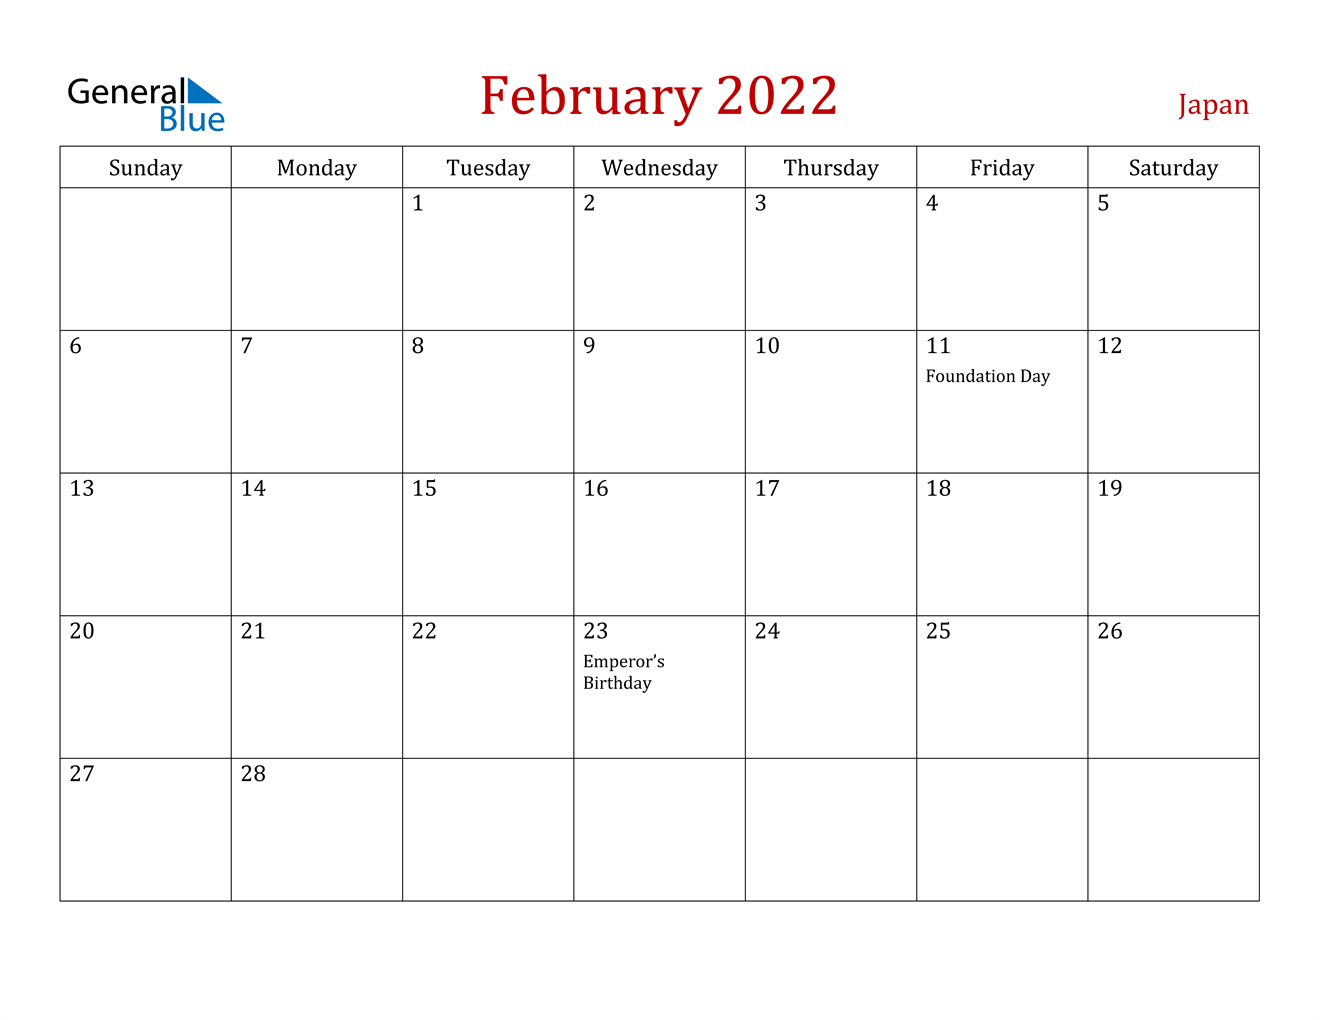 February 2022 Calendar - Japan